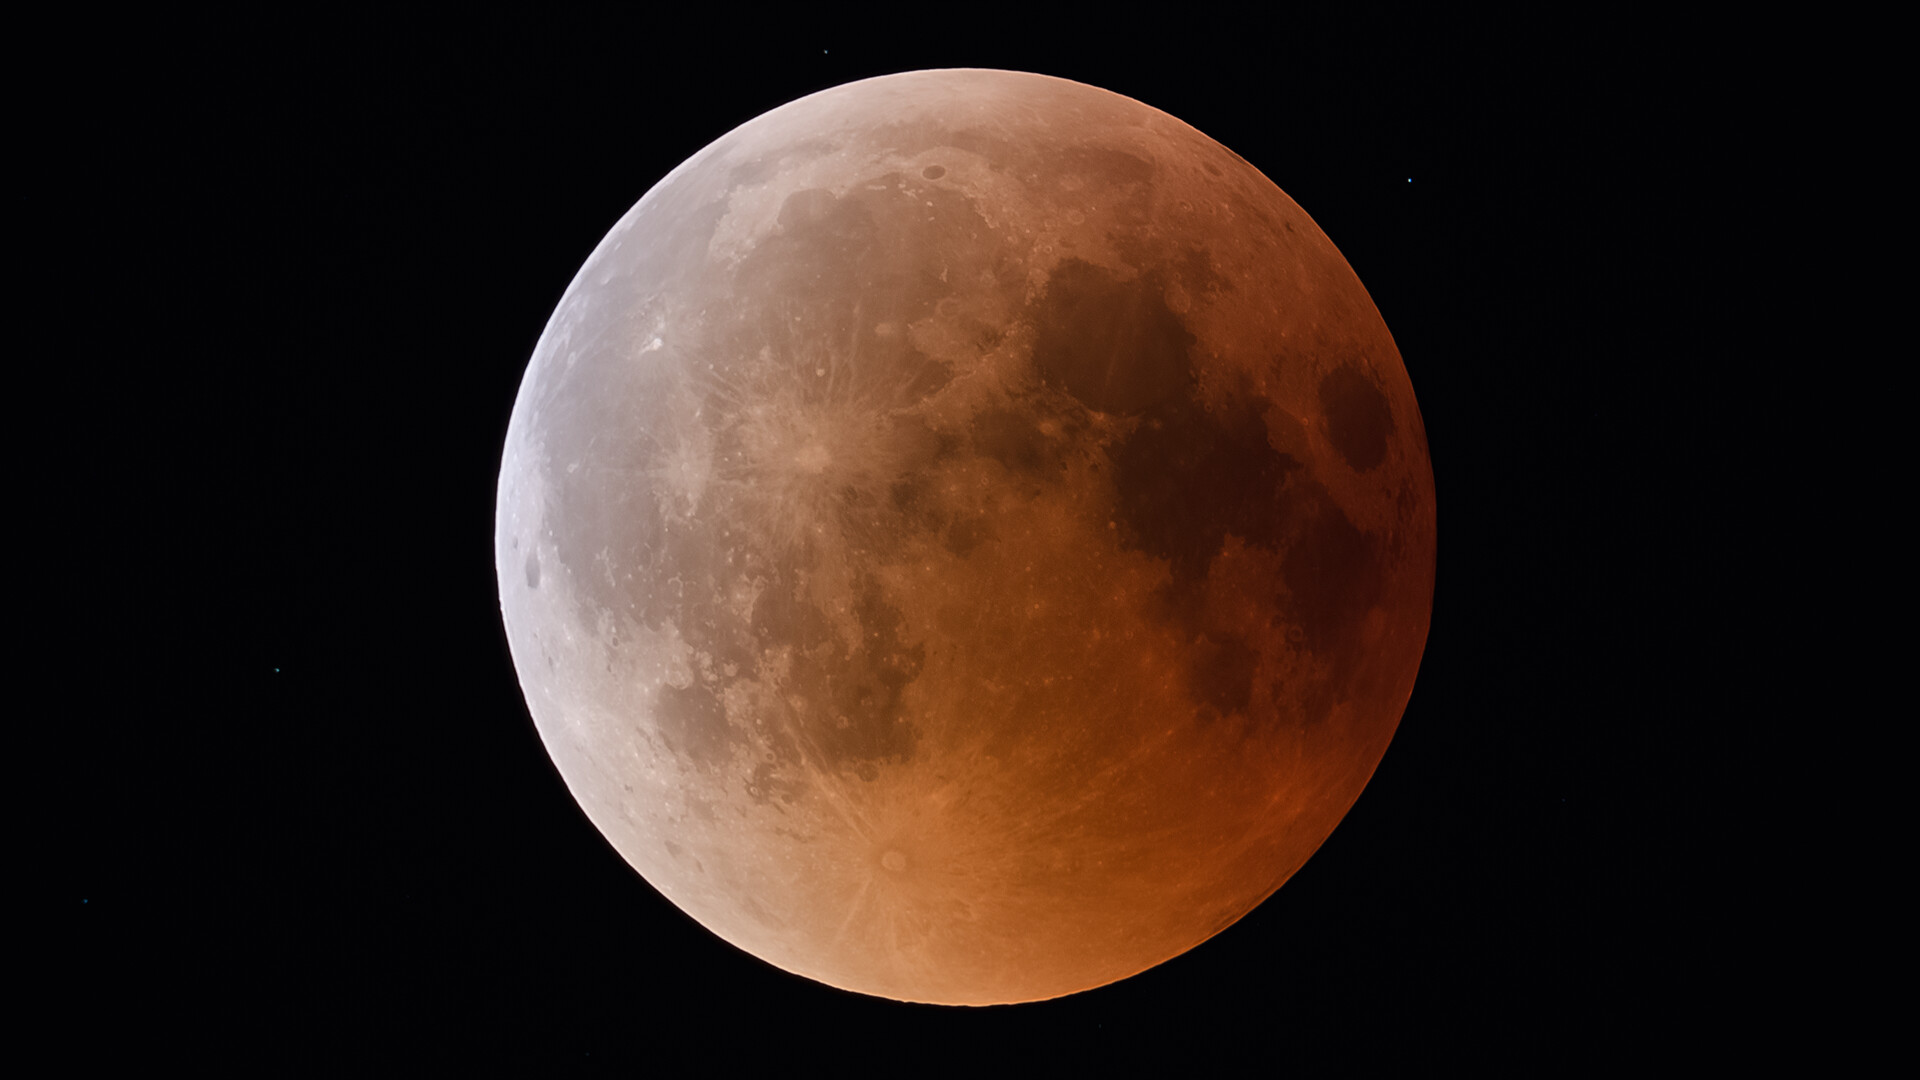 Awe-inspiring lunar eclipse, Celestial phenomenon, Astronomical marvel, Night sky spectacle, 1920x1080 Full HD Desktop